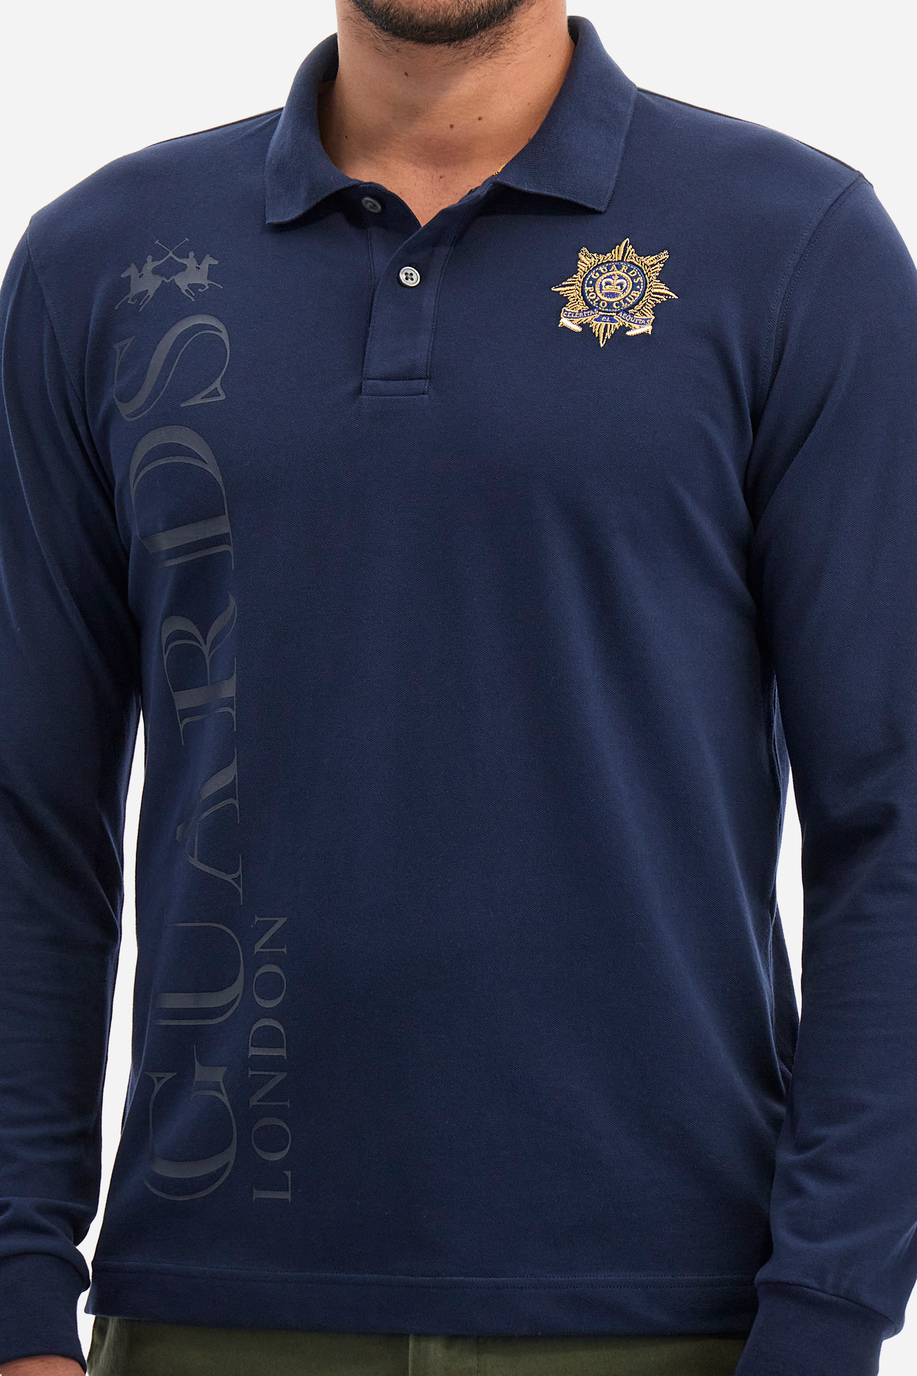 Herren -Poloshirt regular fit - Wyndsor - Guards - England | La Martina - Official Online Shop